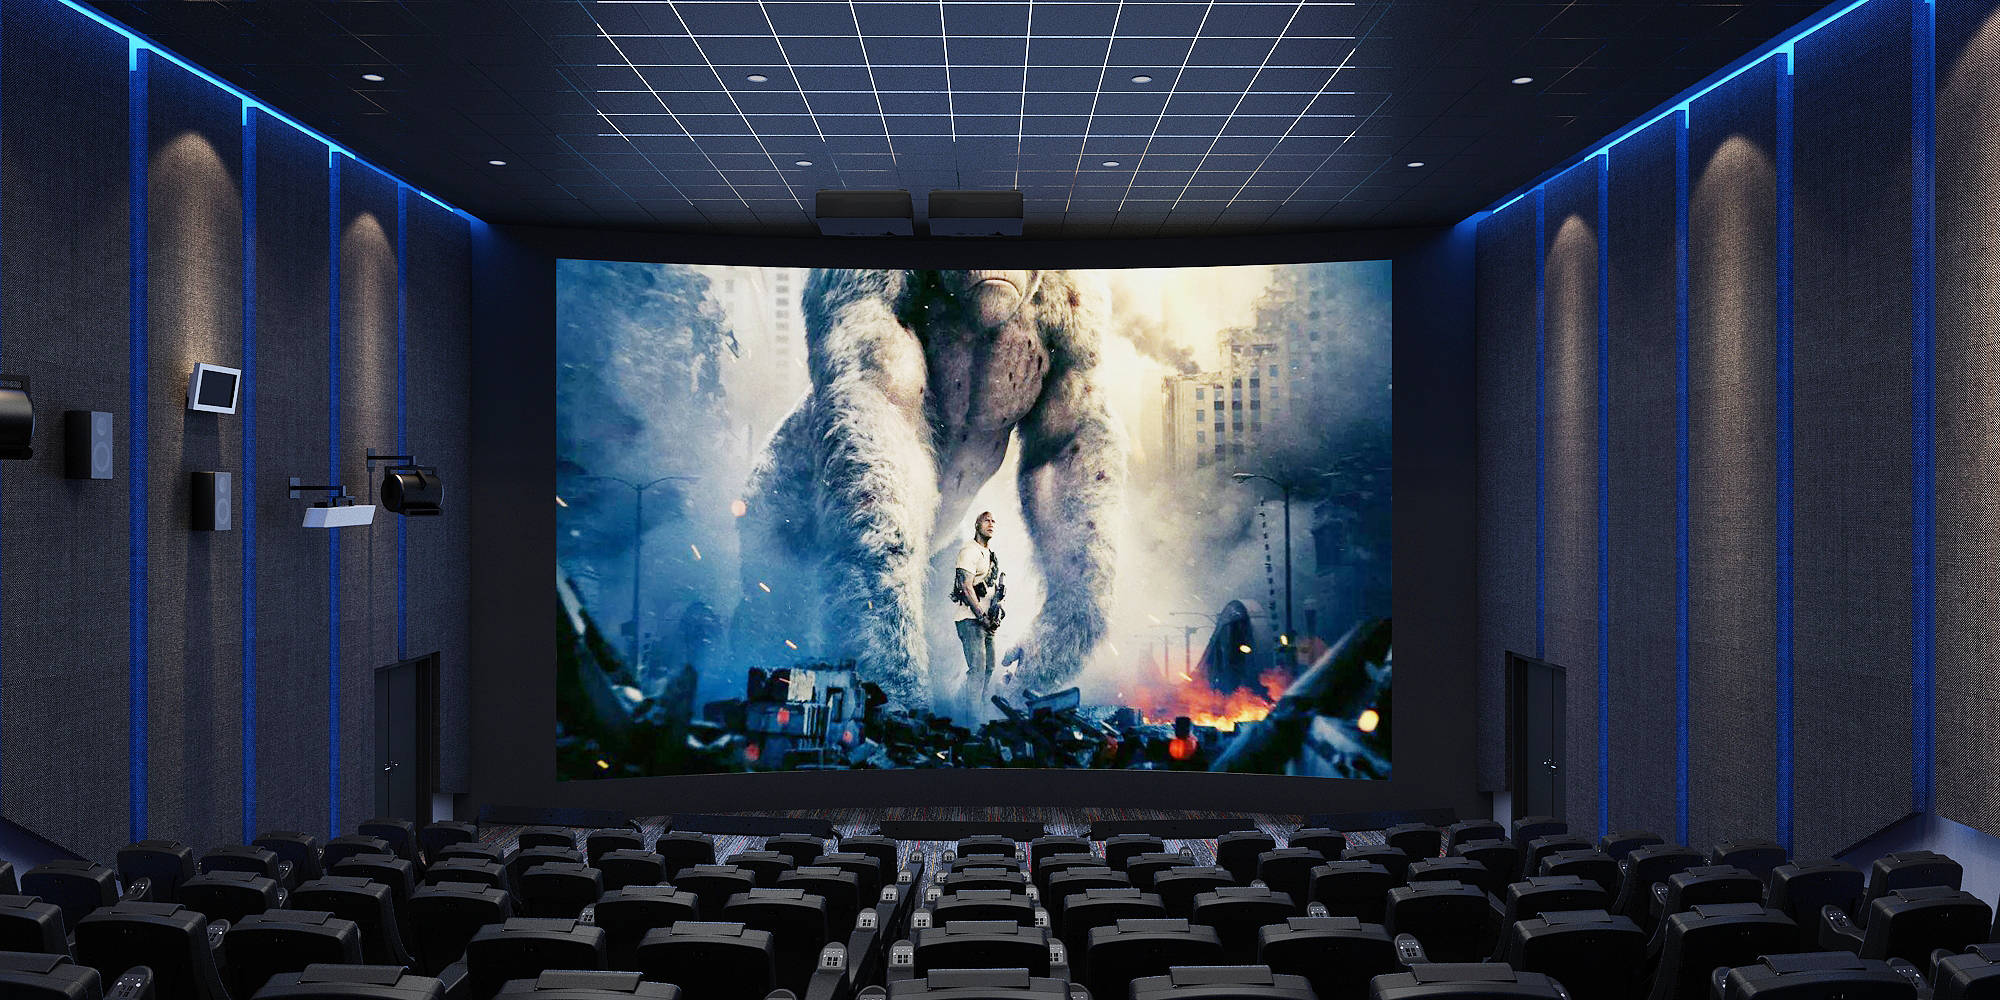 4d影院的墙体都需要使用吸音隔音材料处理,为保证吸音隔音效果,材料